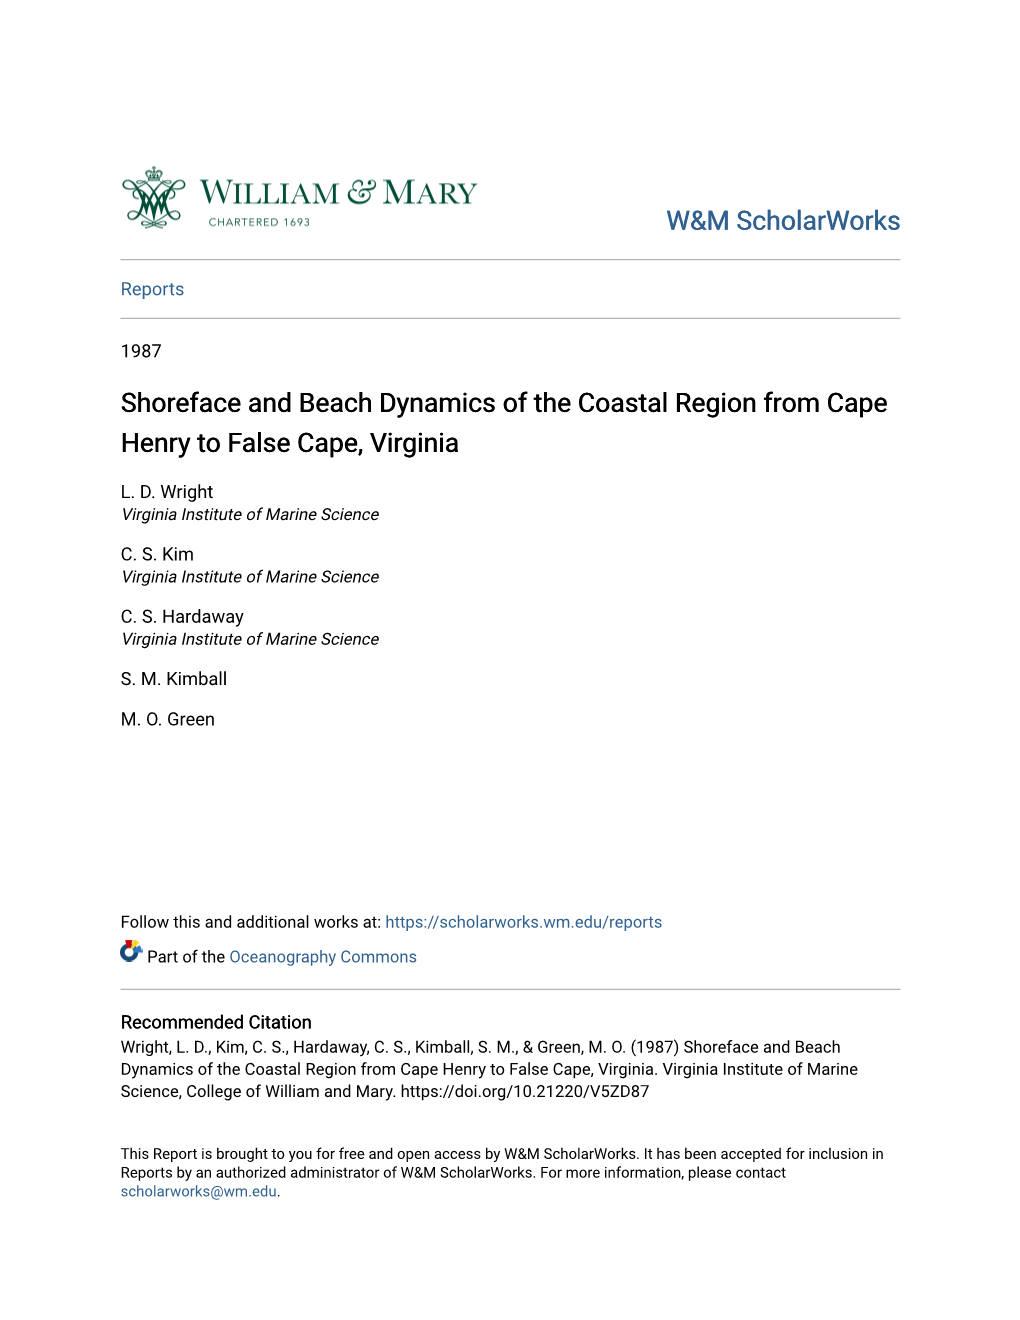 Shoreface and Beach Dynamics of the Coastal Region from Cape Henry to False Cape, Virginia